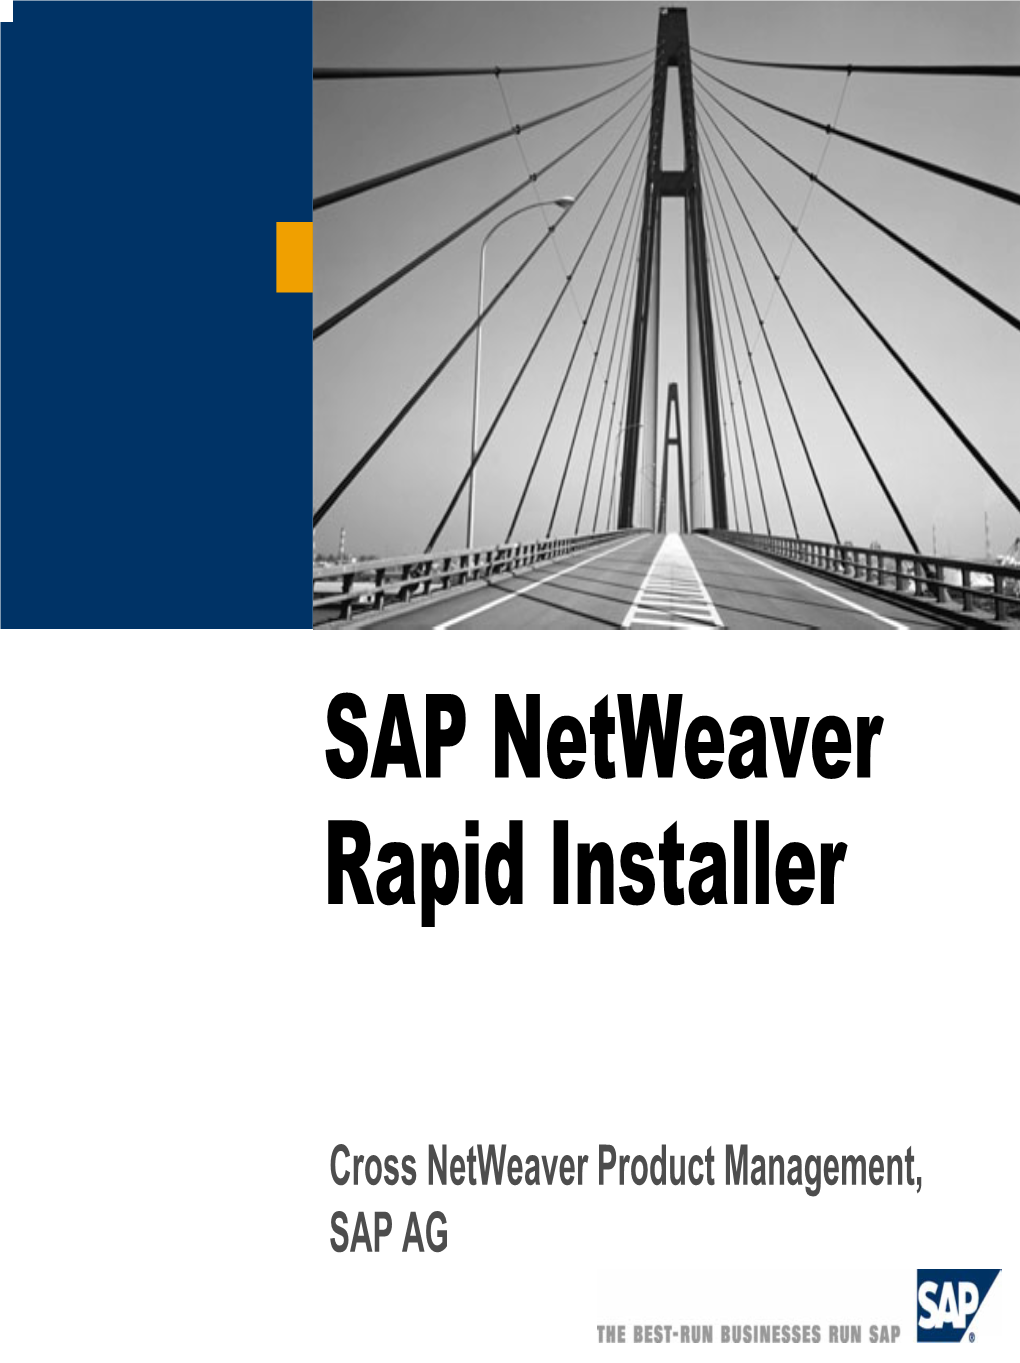 SAP Netweaver Rapid Installer